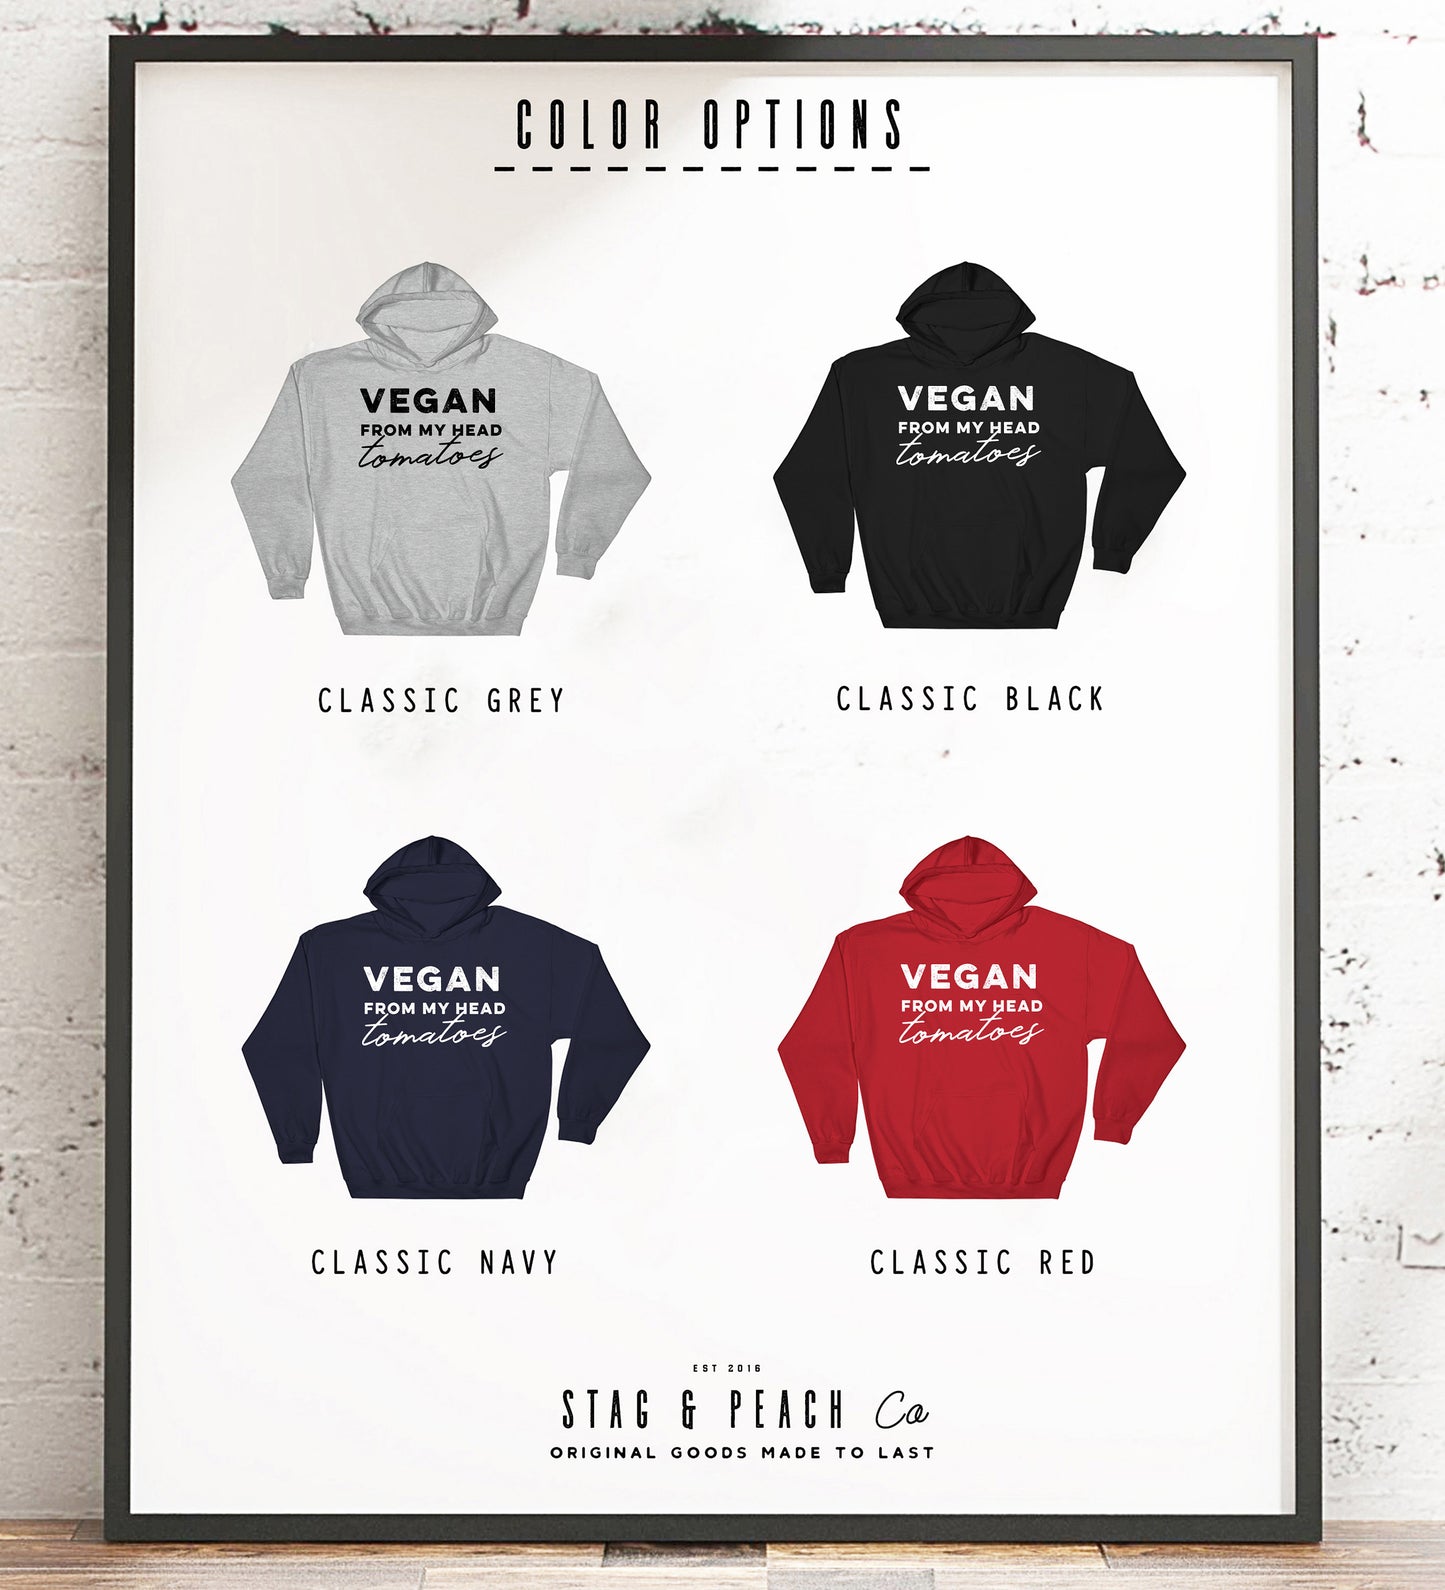 Vegan From My Head Tomatoes Hoodie- Vegan shirt, Cute Vegan Shirt, Funny Vegan Shirt, Vegan Gift, Plant Based Shirt, Vegan Tee, Vegan Hoodie